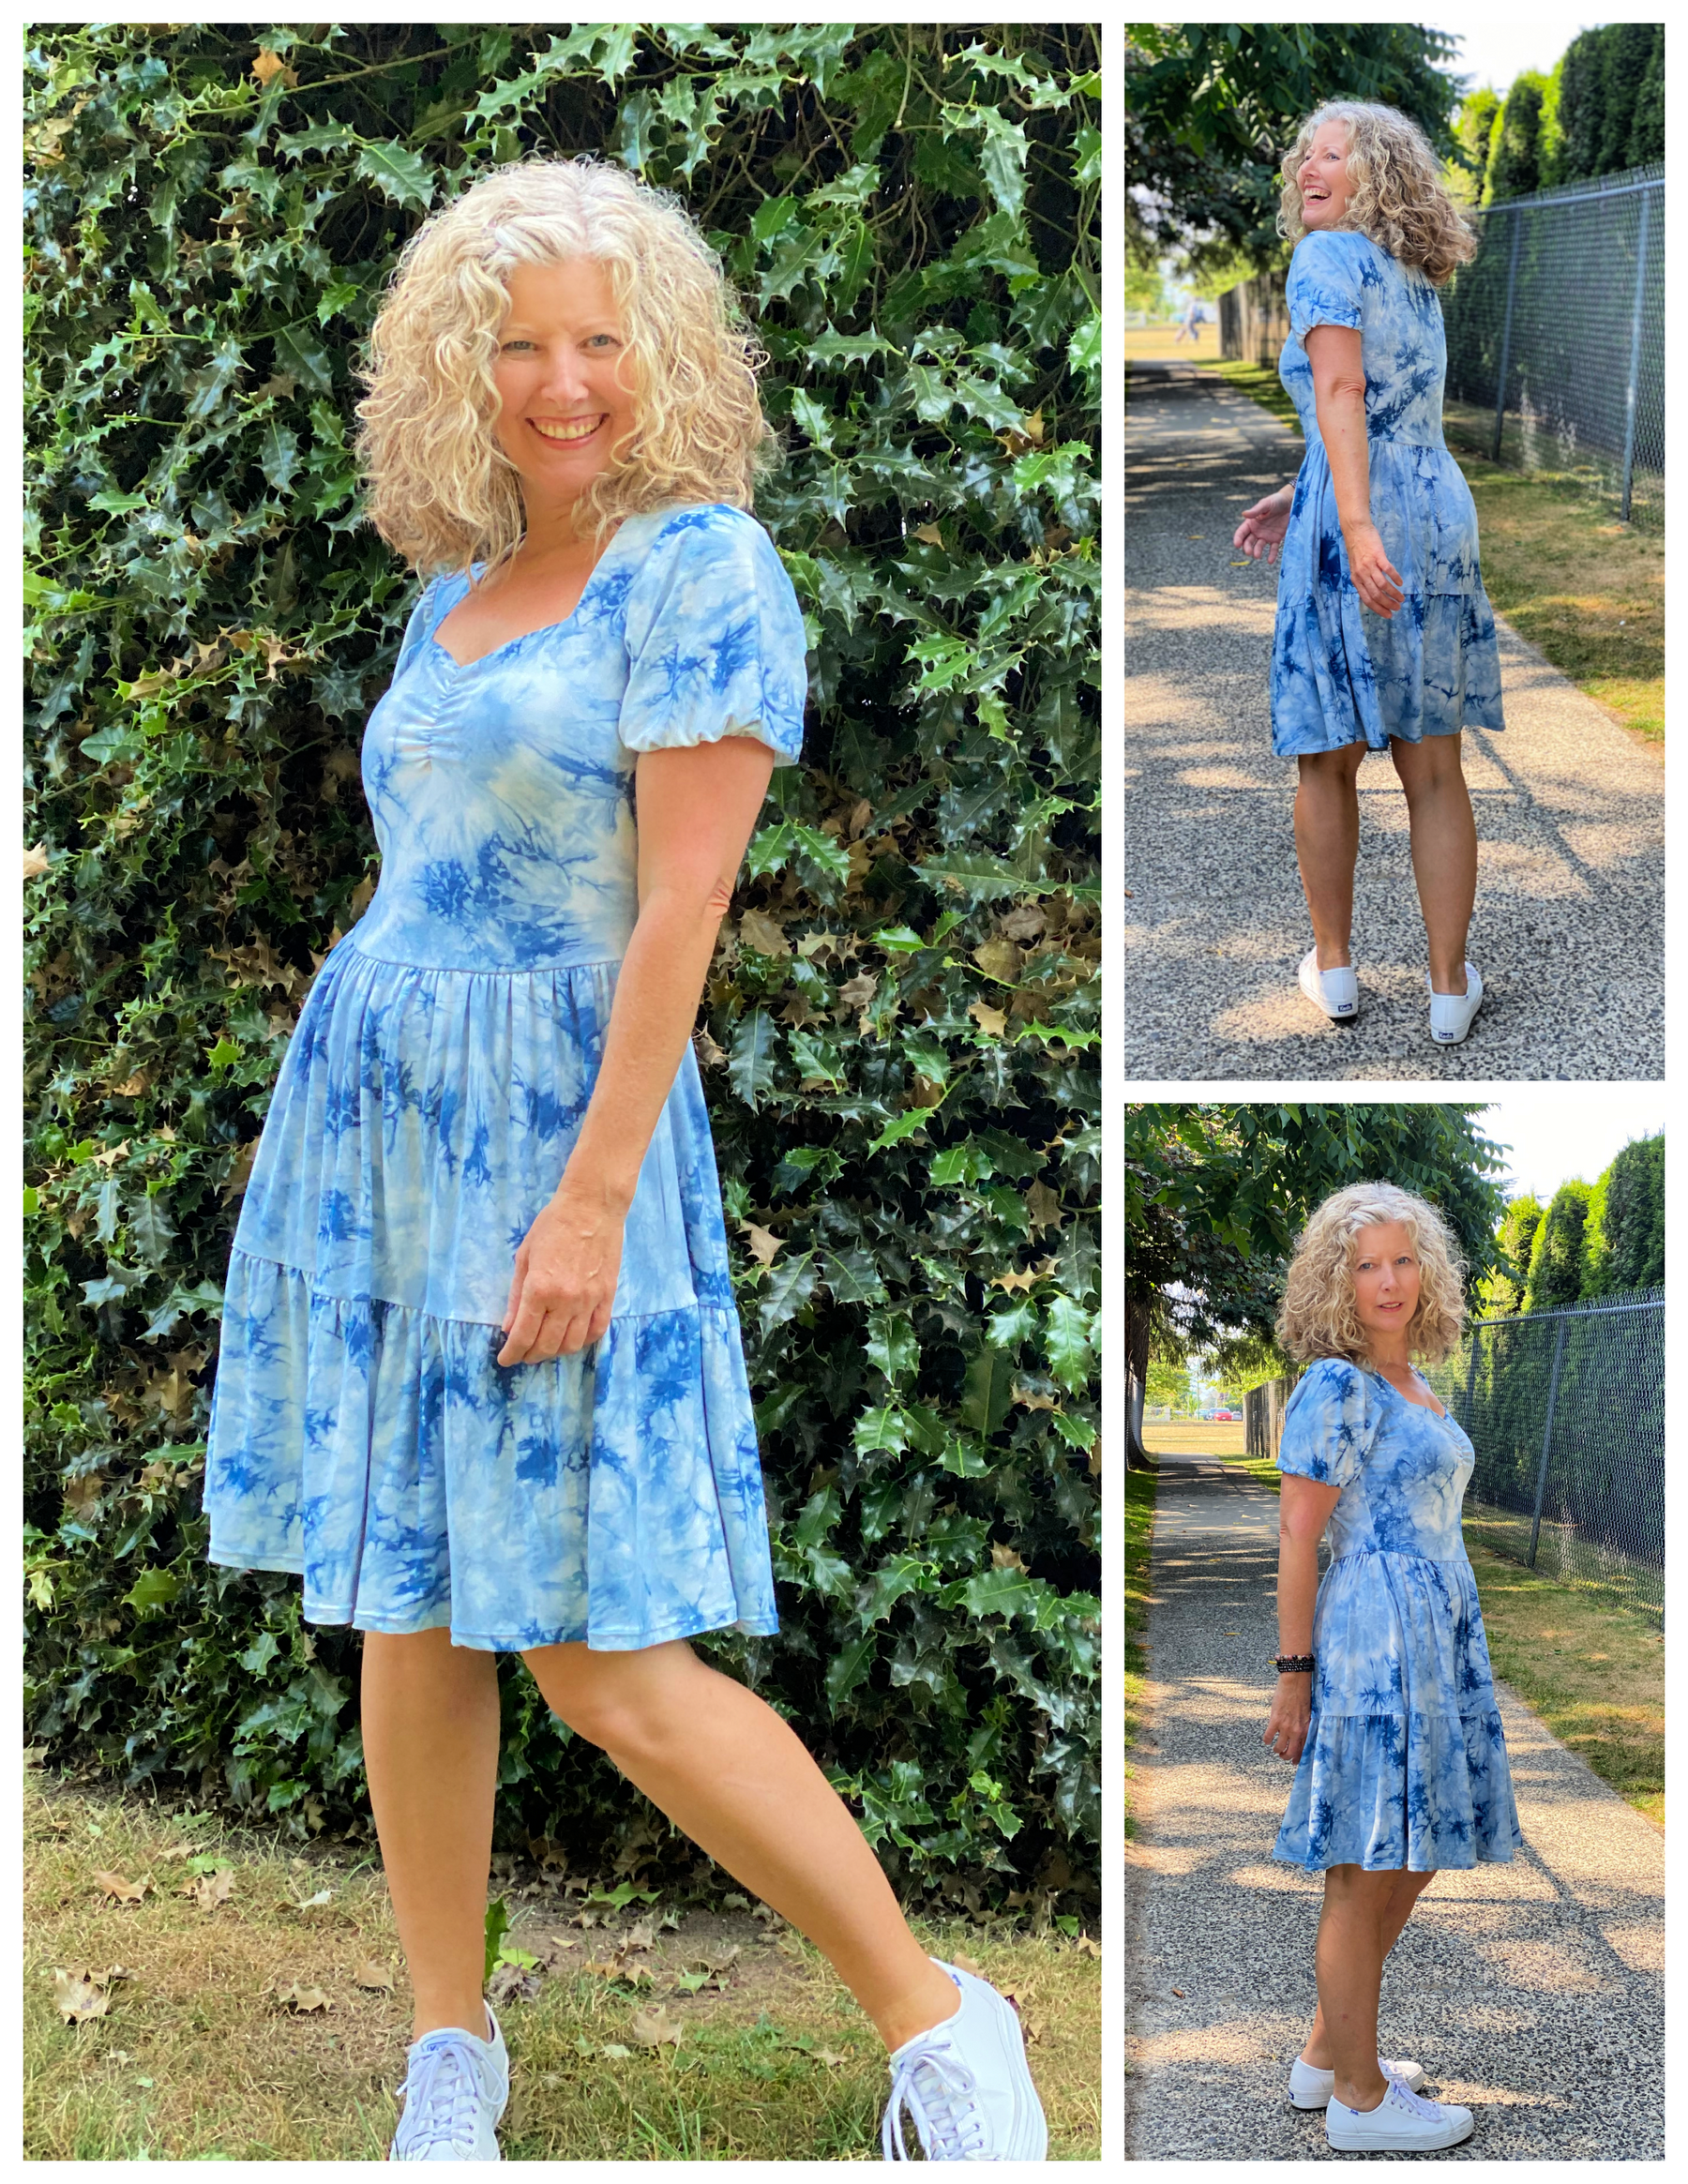 Diana Tiered Top & Dress Pattern